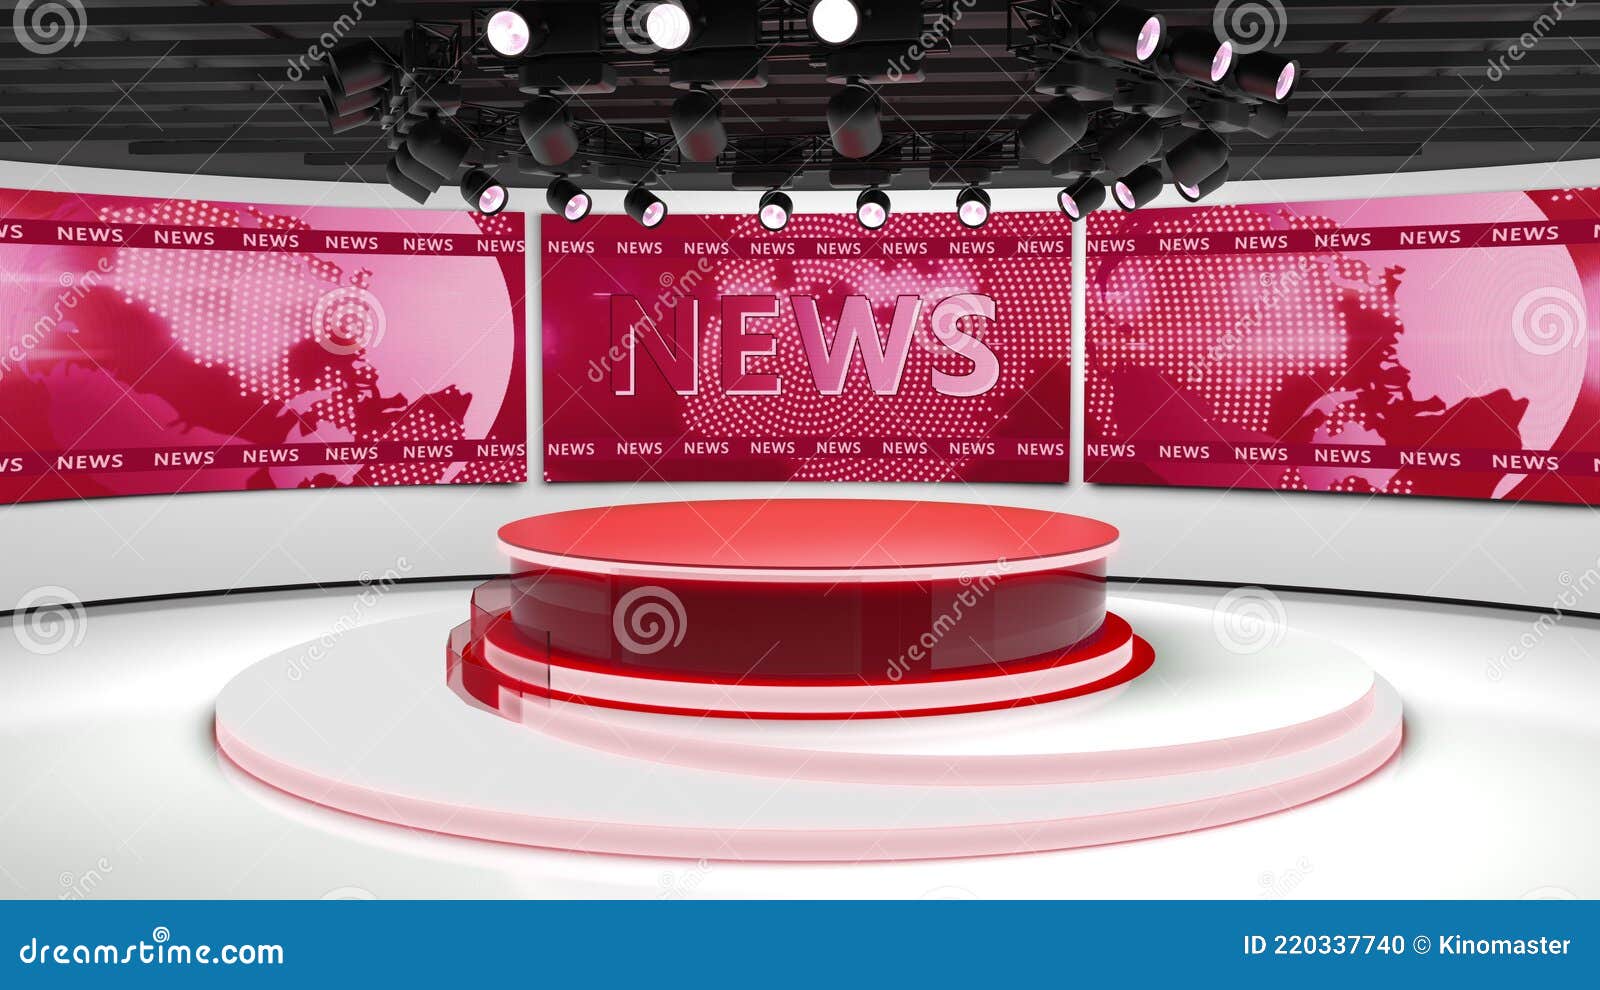 Tv studio. studio. news studio. newsroom background for news broadcasts.  blurred of studio at tv station. news channel design | CanStock